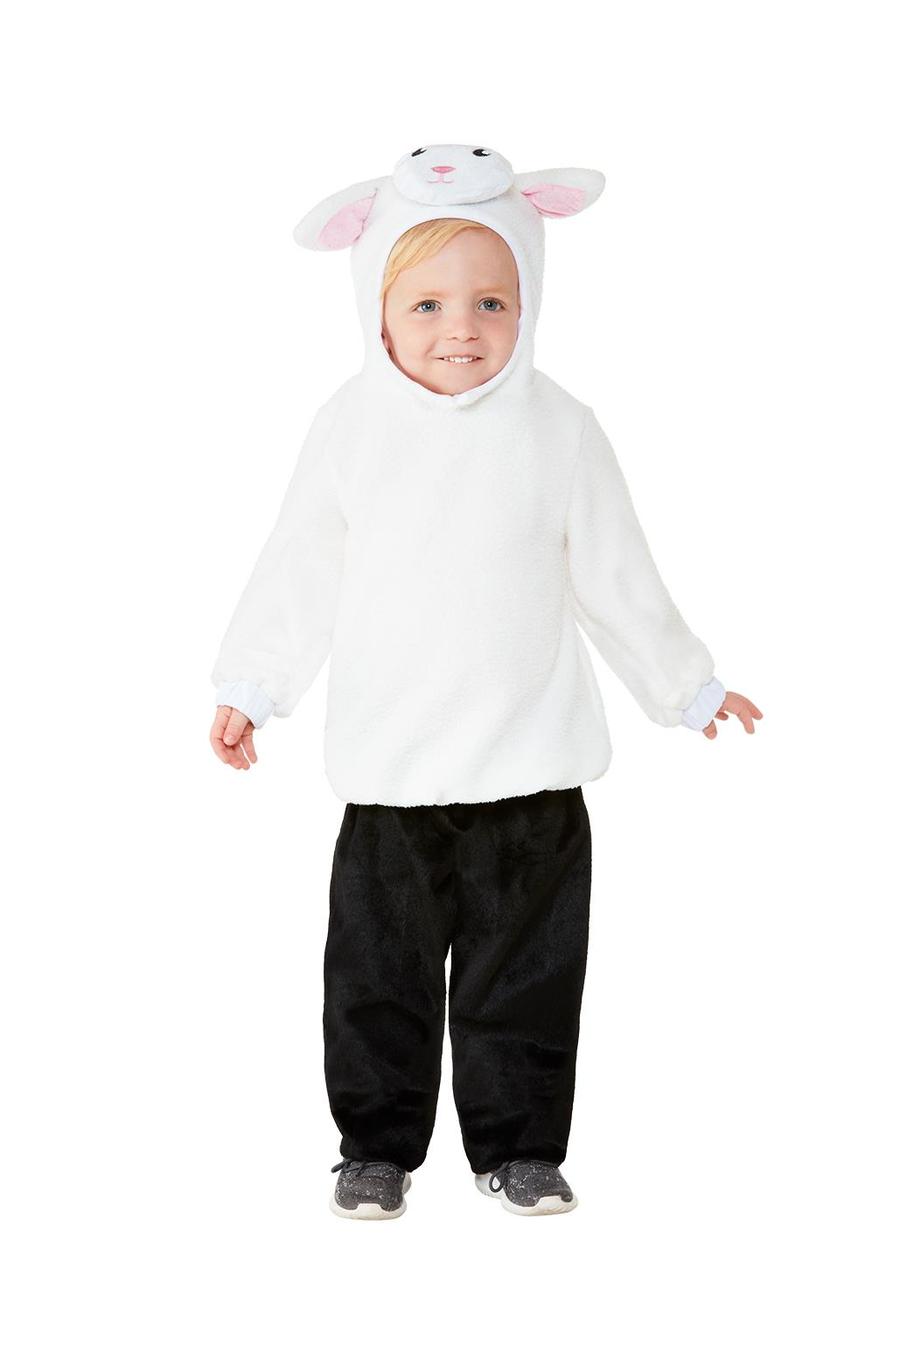 Toddler Lamb Costume Wholesale